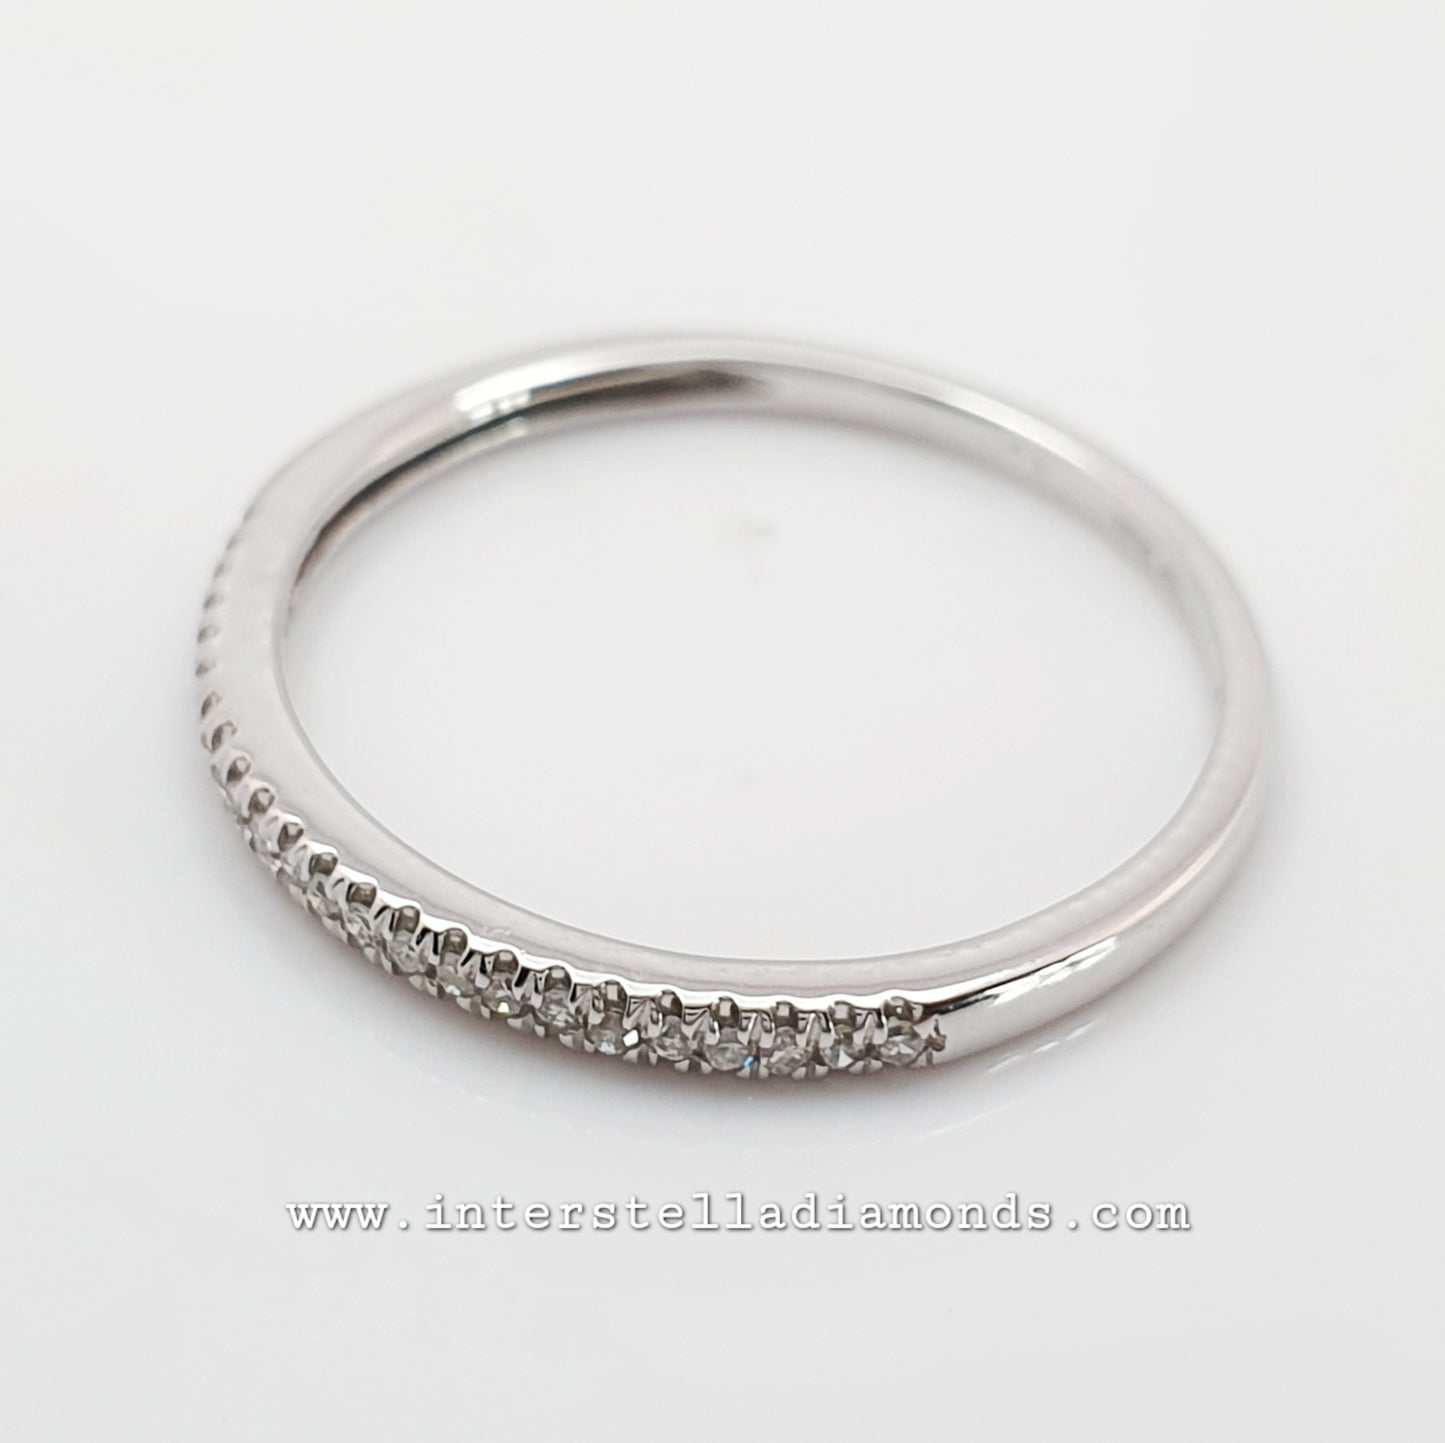 Fine white gold wedding ring or stacker ring